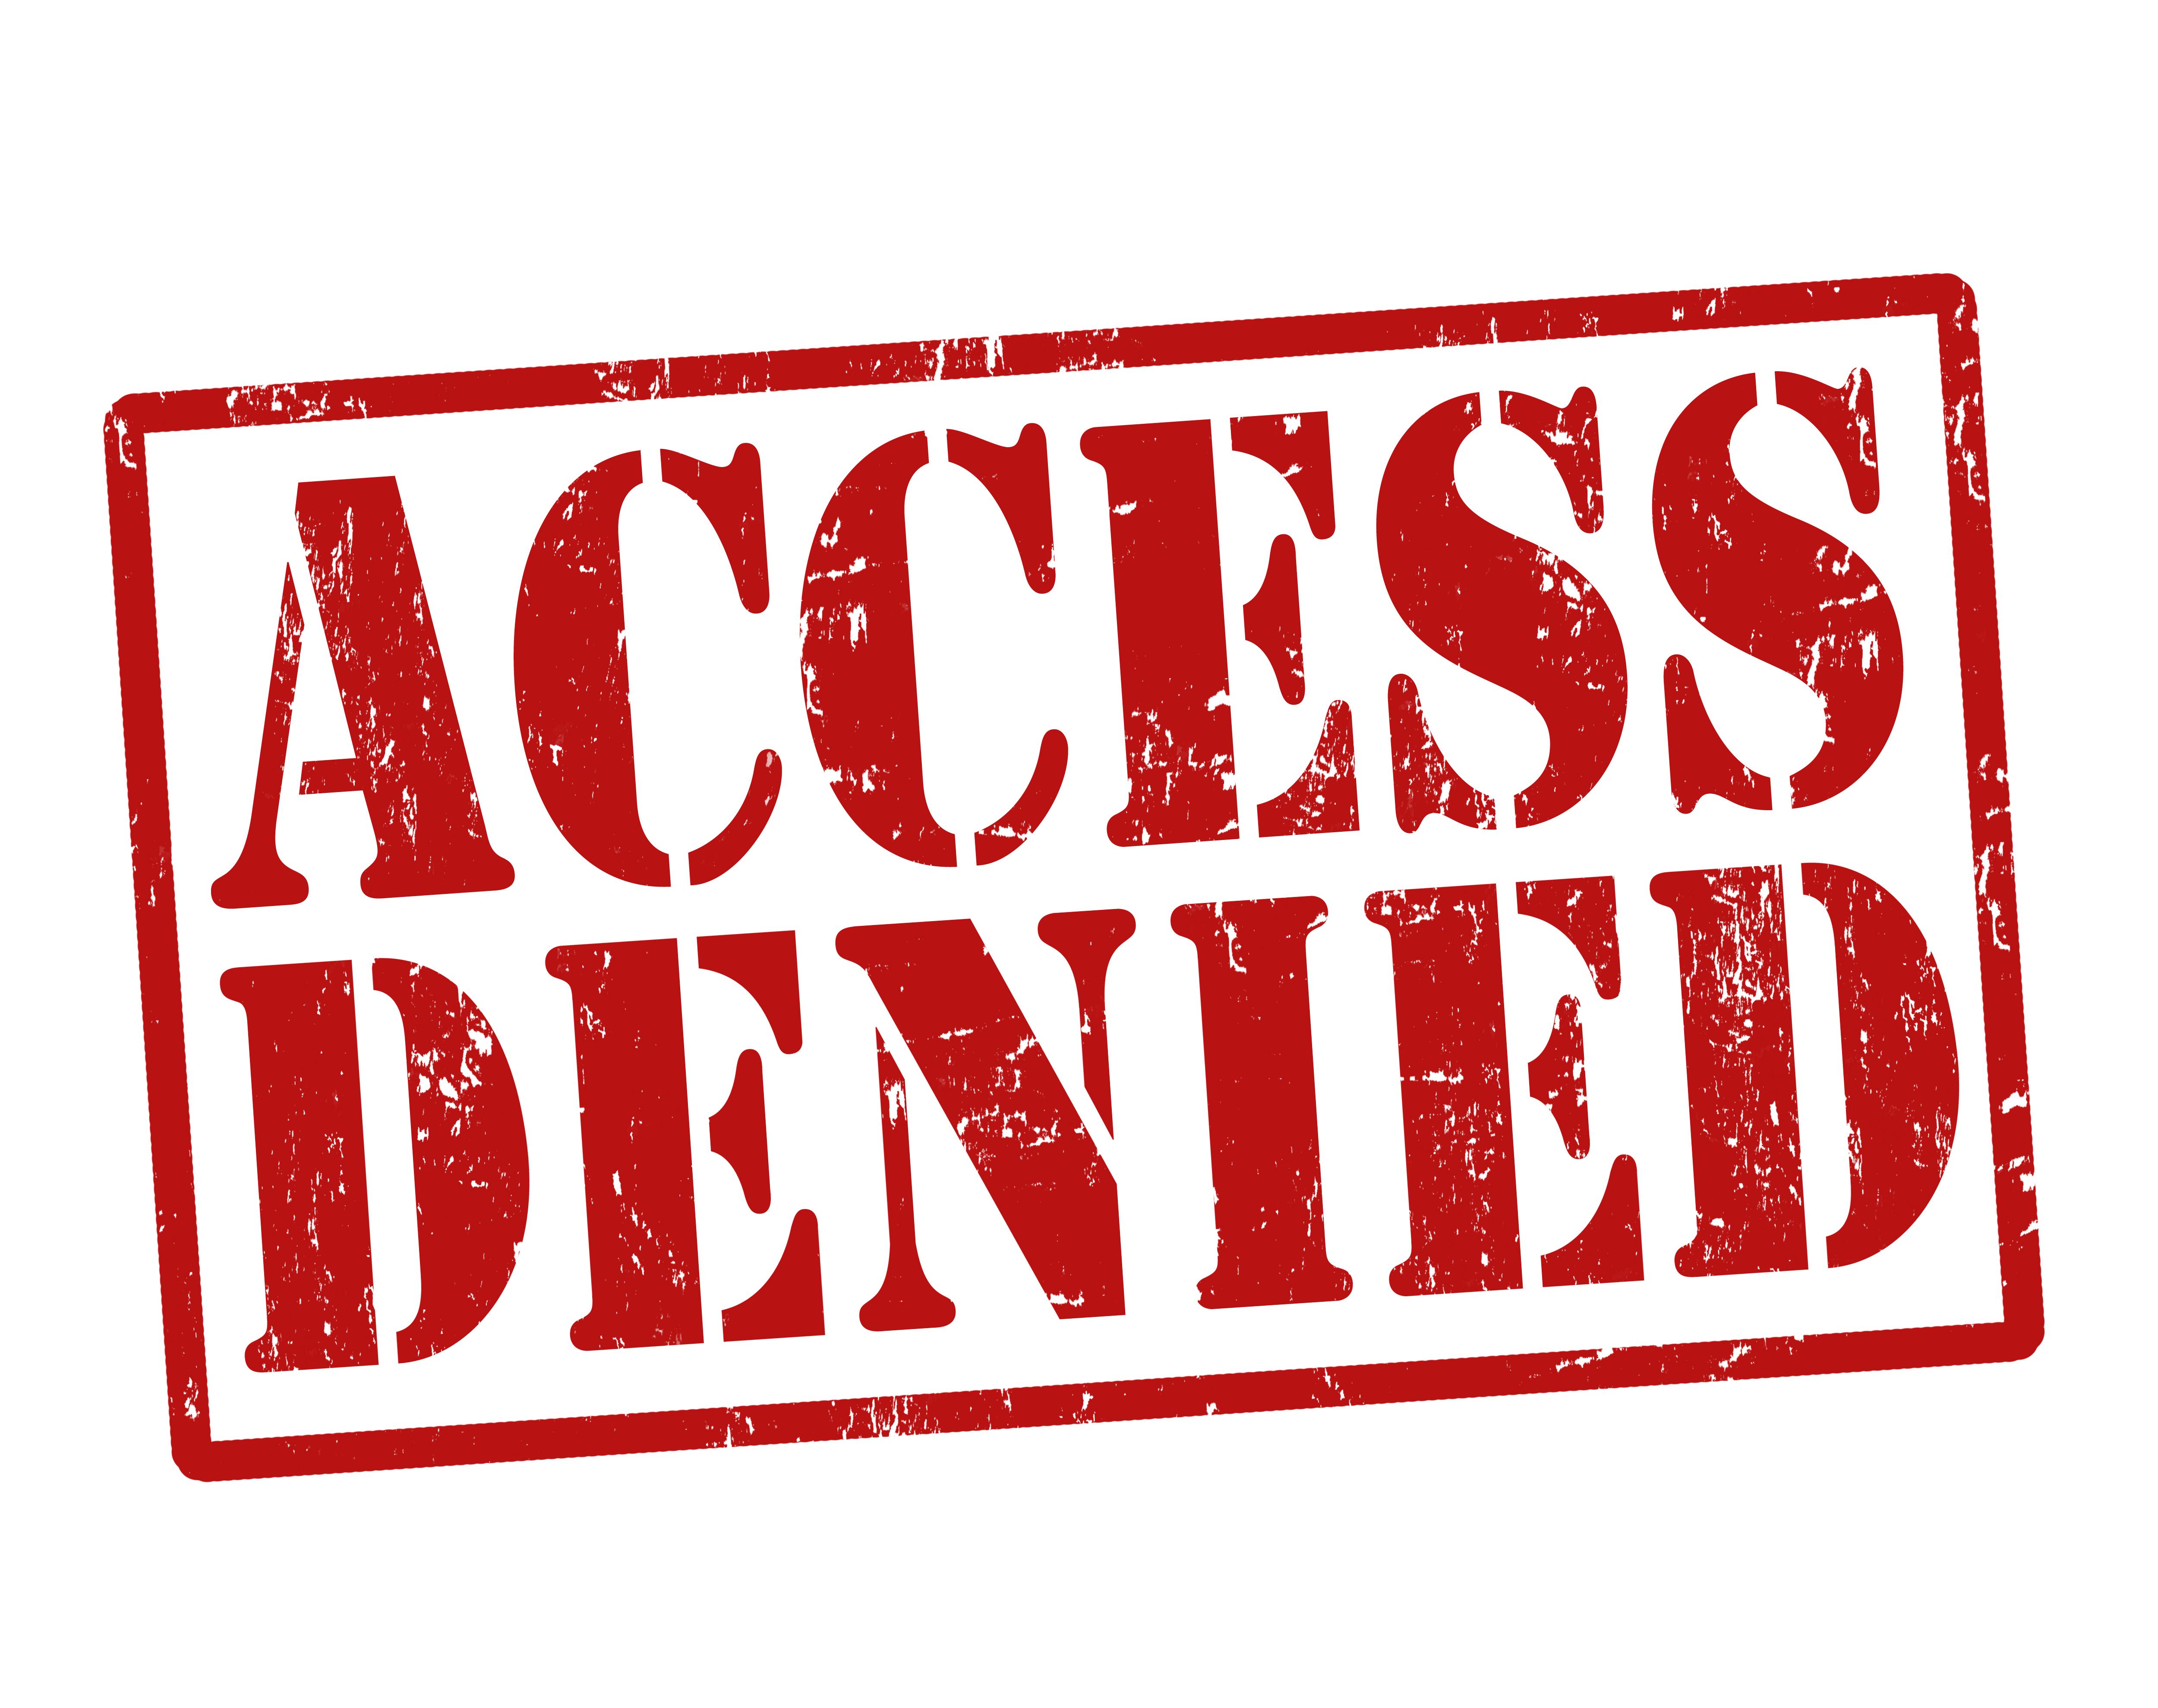 C access denied. Access denied штамп. Штамп запрета на английском. Невъездной штамп. Штамп запрещено.